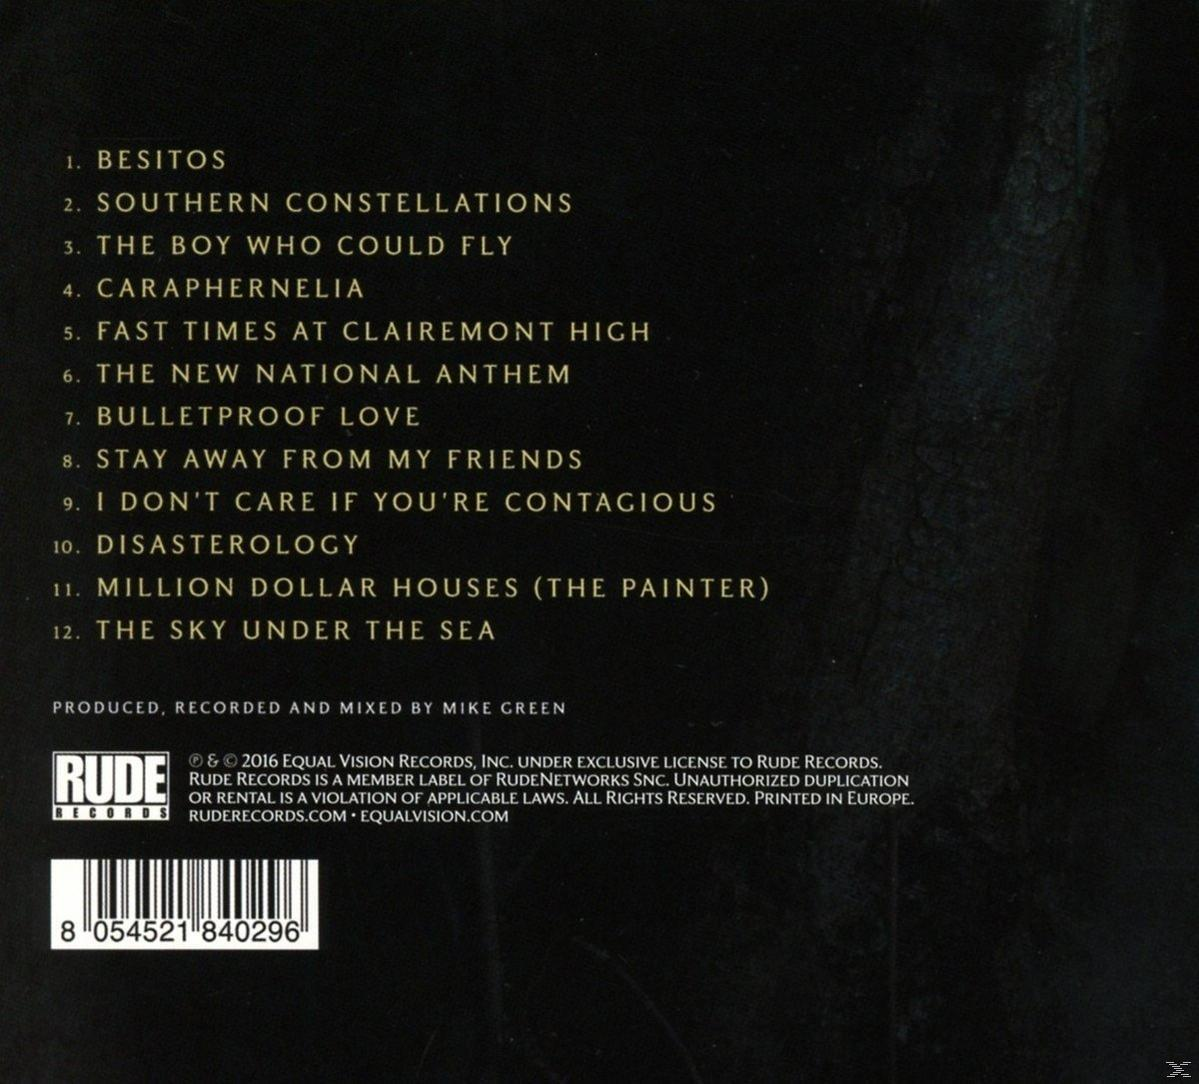 Pierce The Veil - Selfish - (CD) Machines